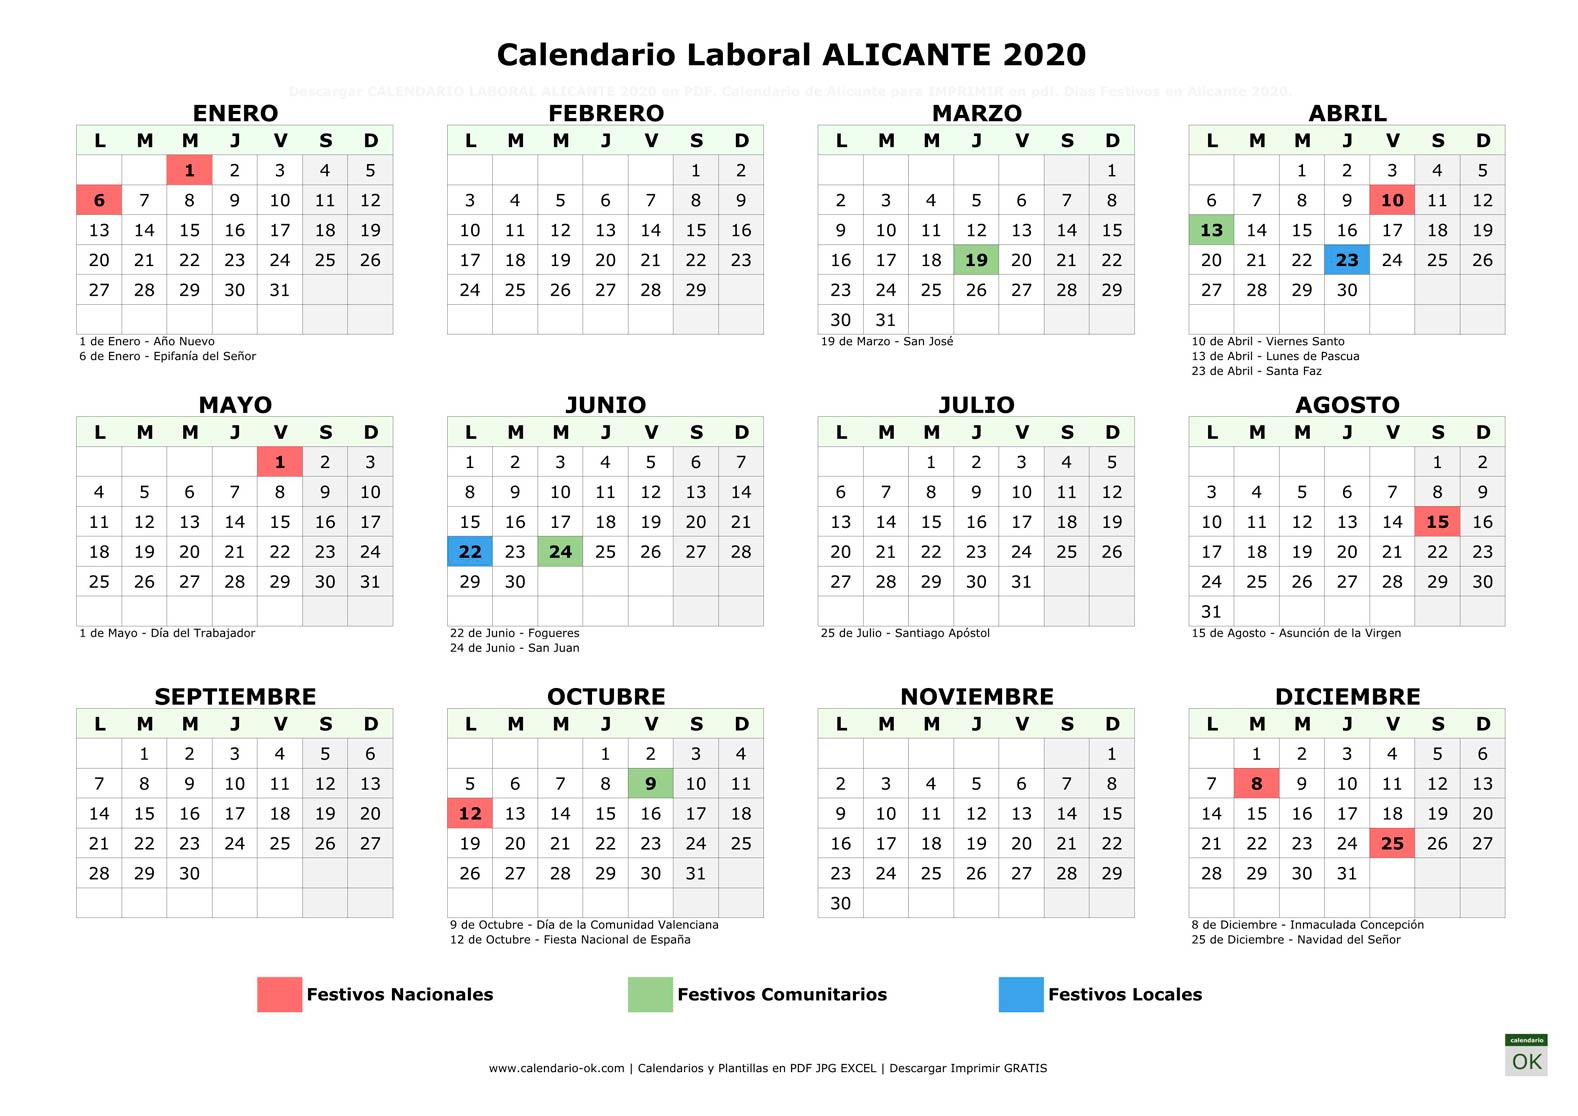 Calendario Laboral ALICANTE 2020 horizontal